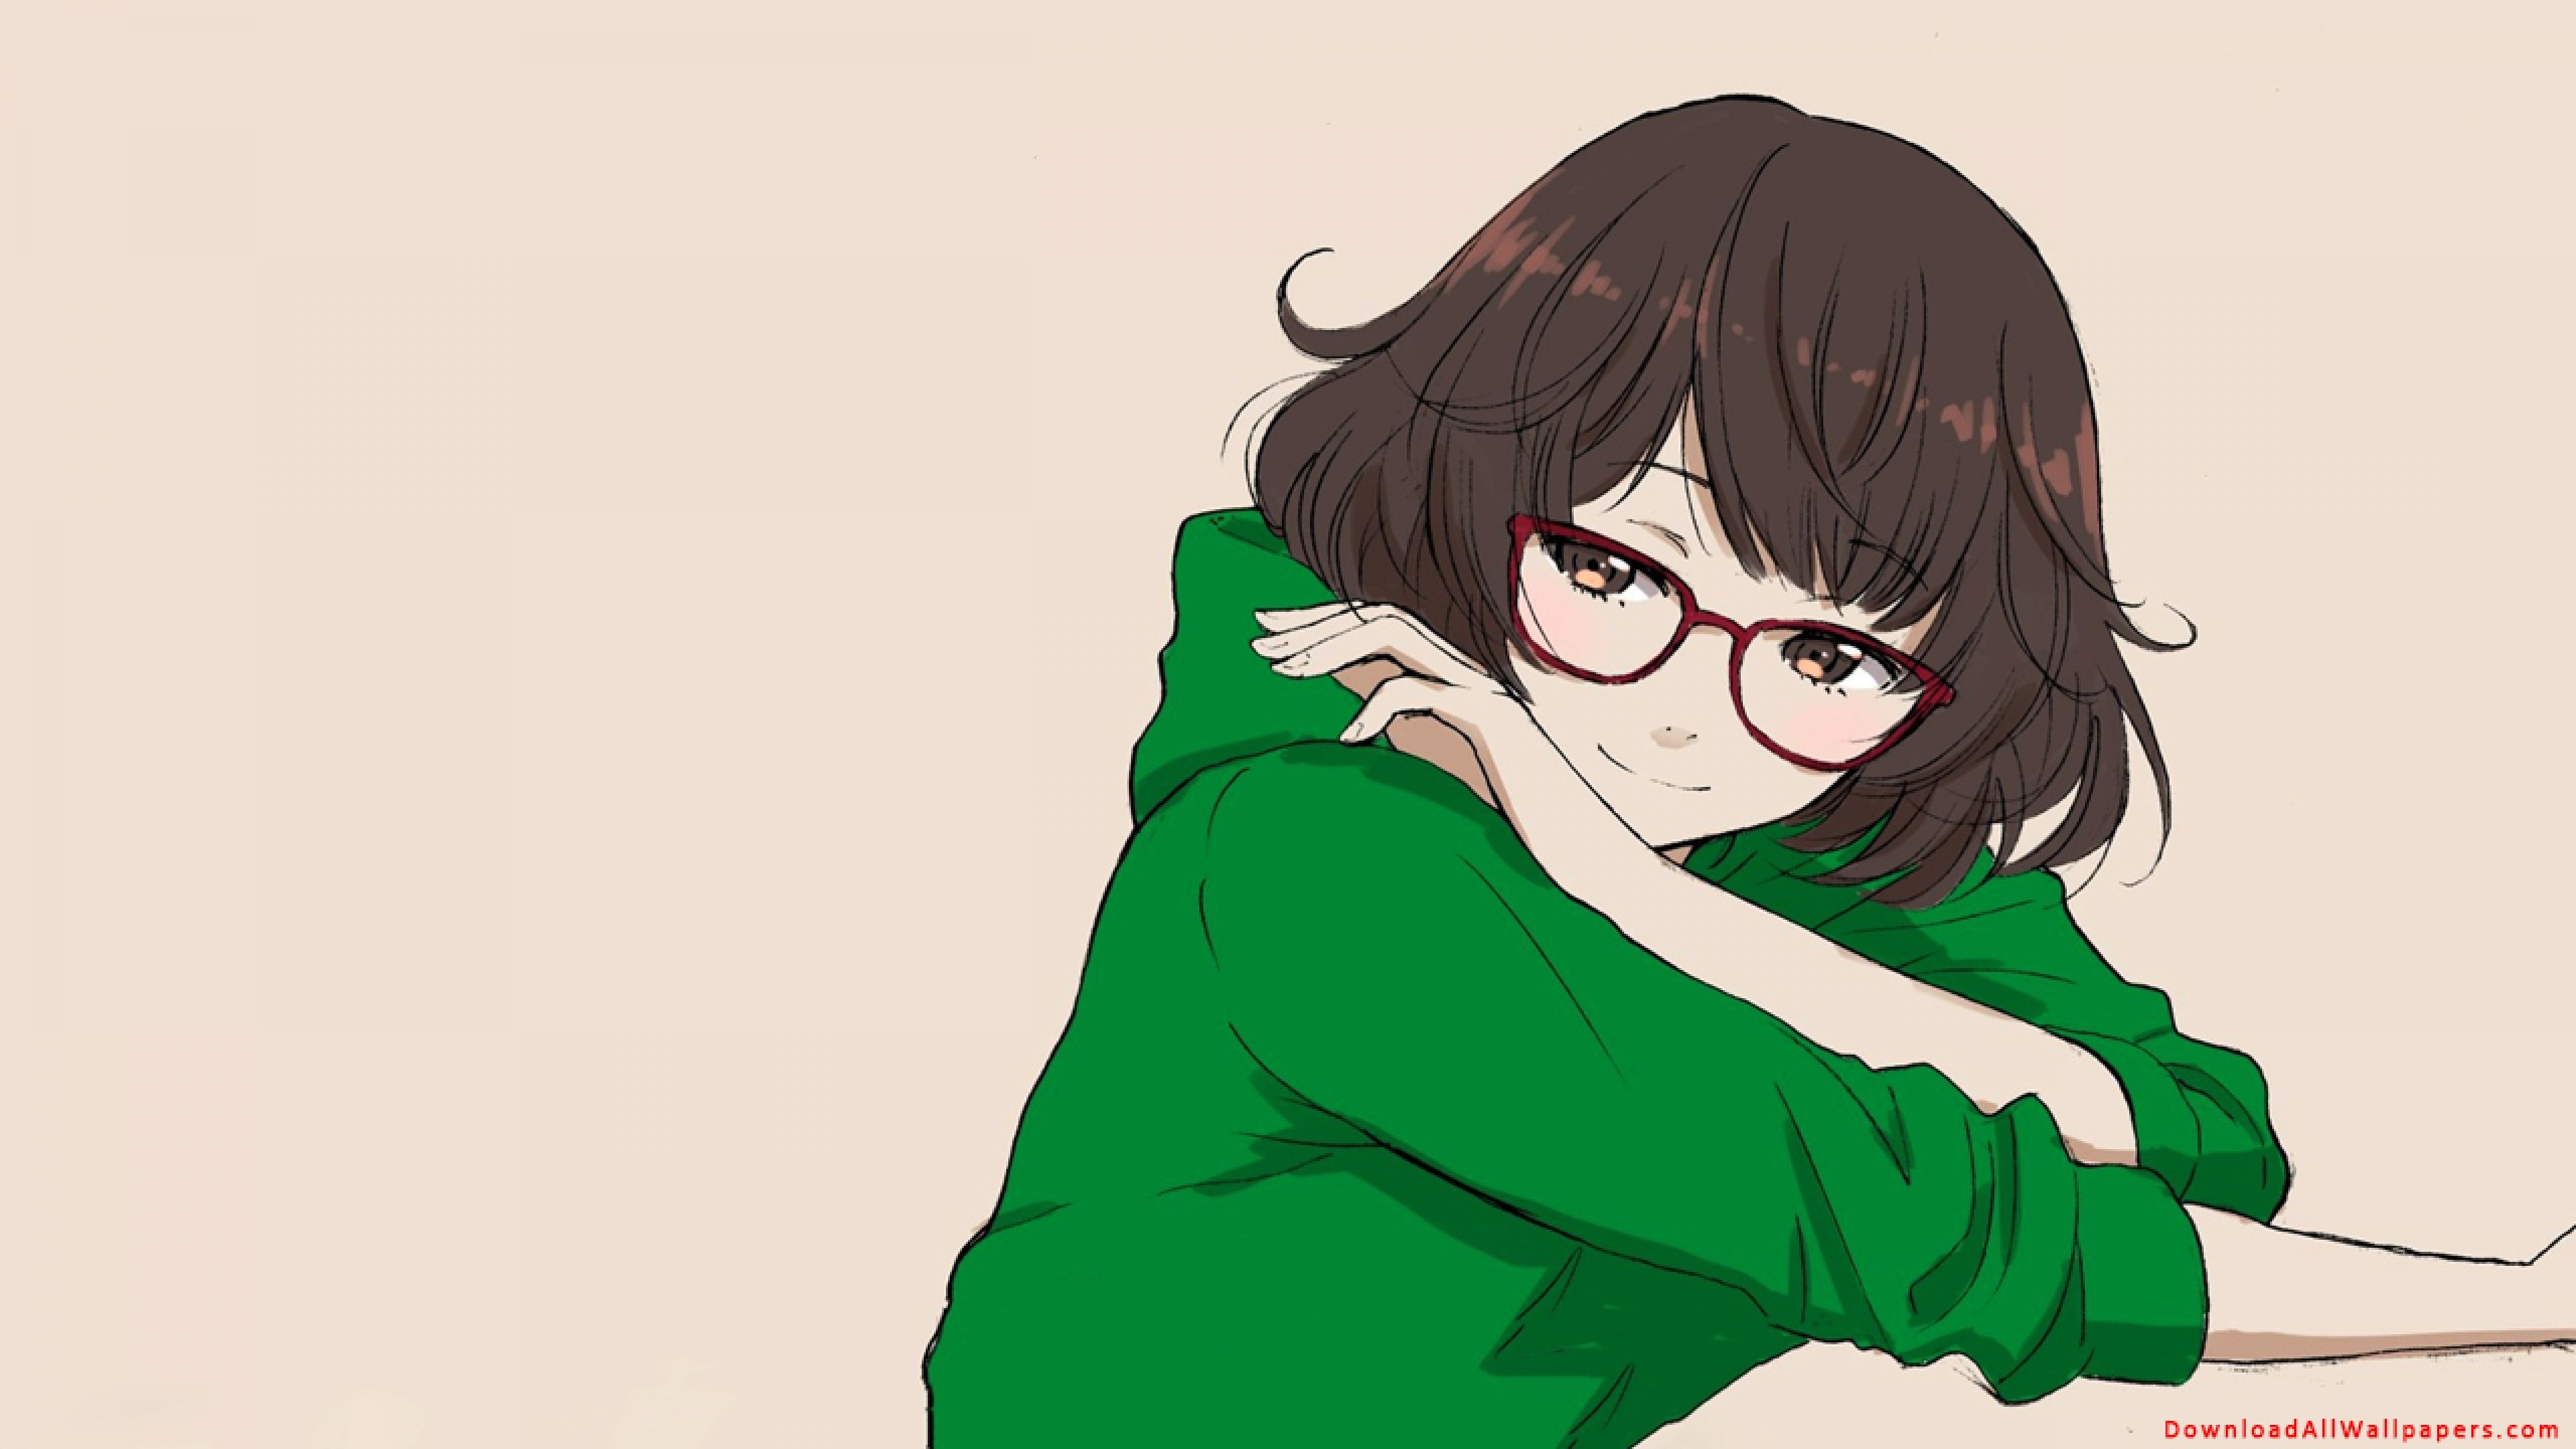 Green Anime Pictures - Beautiful Green Anime Girl Wallpaper | Bodaqwasuaq